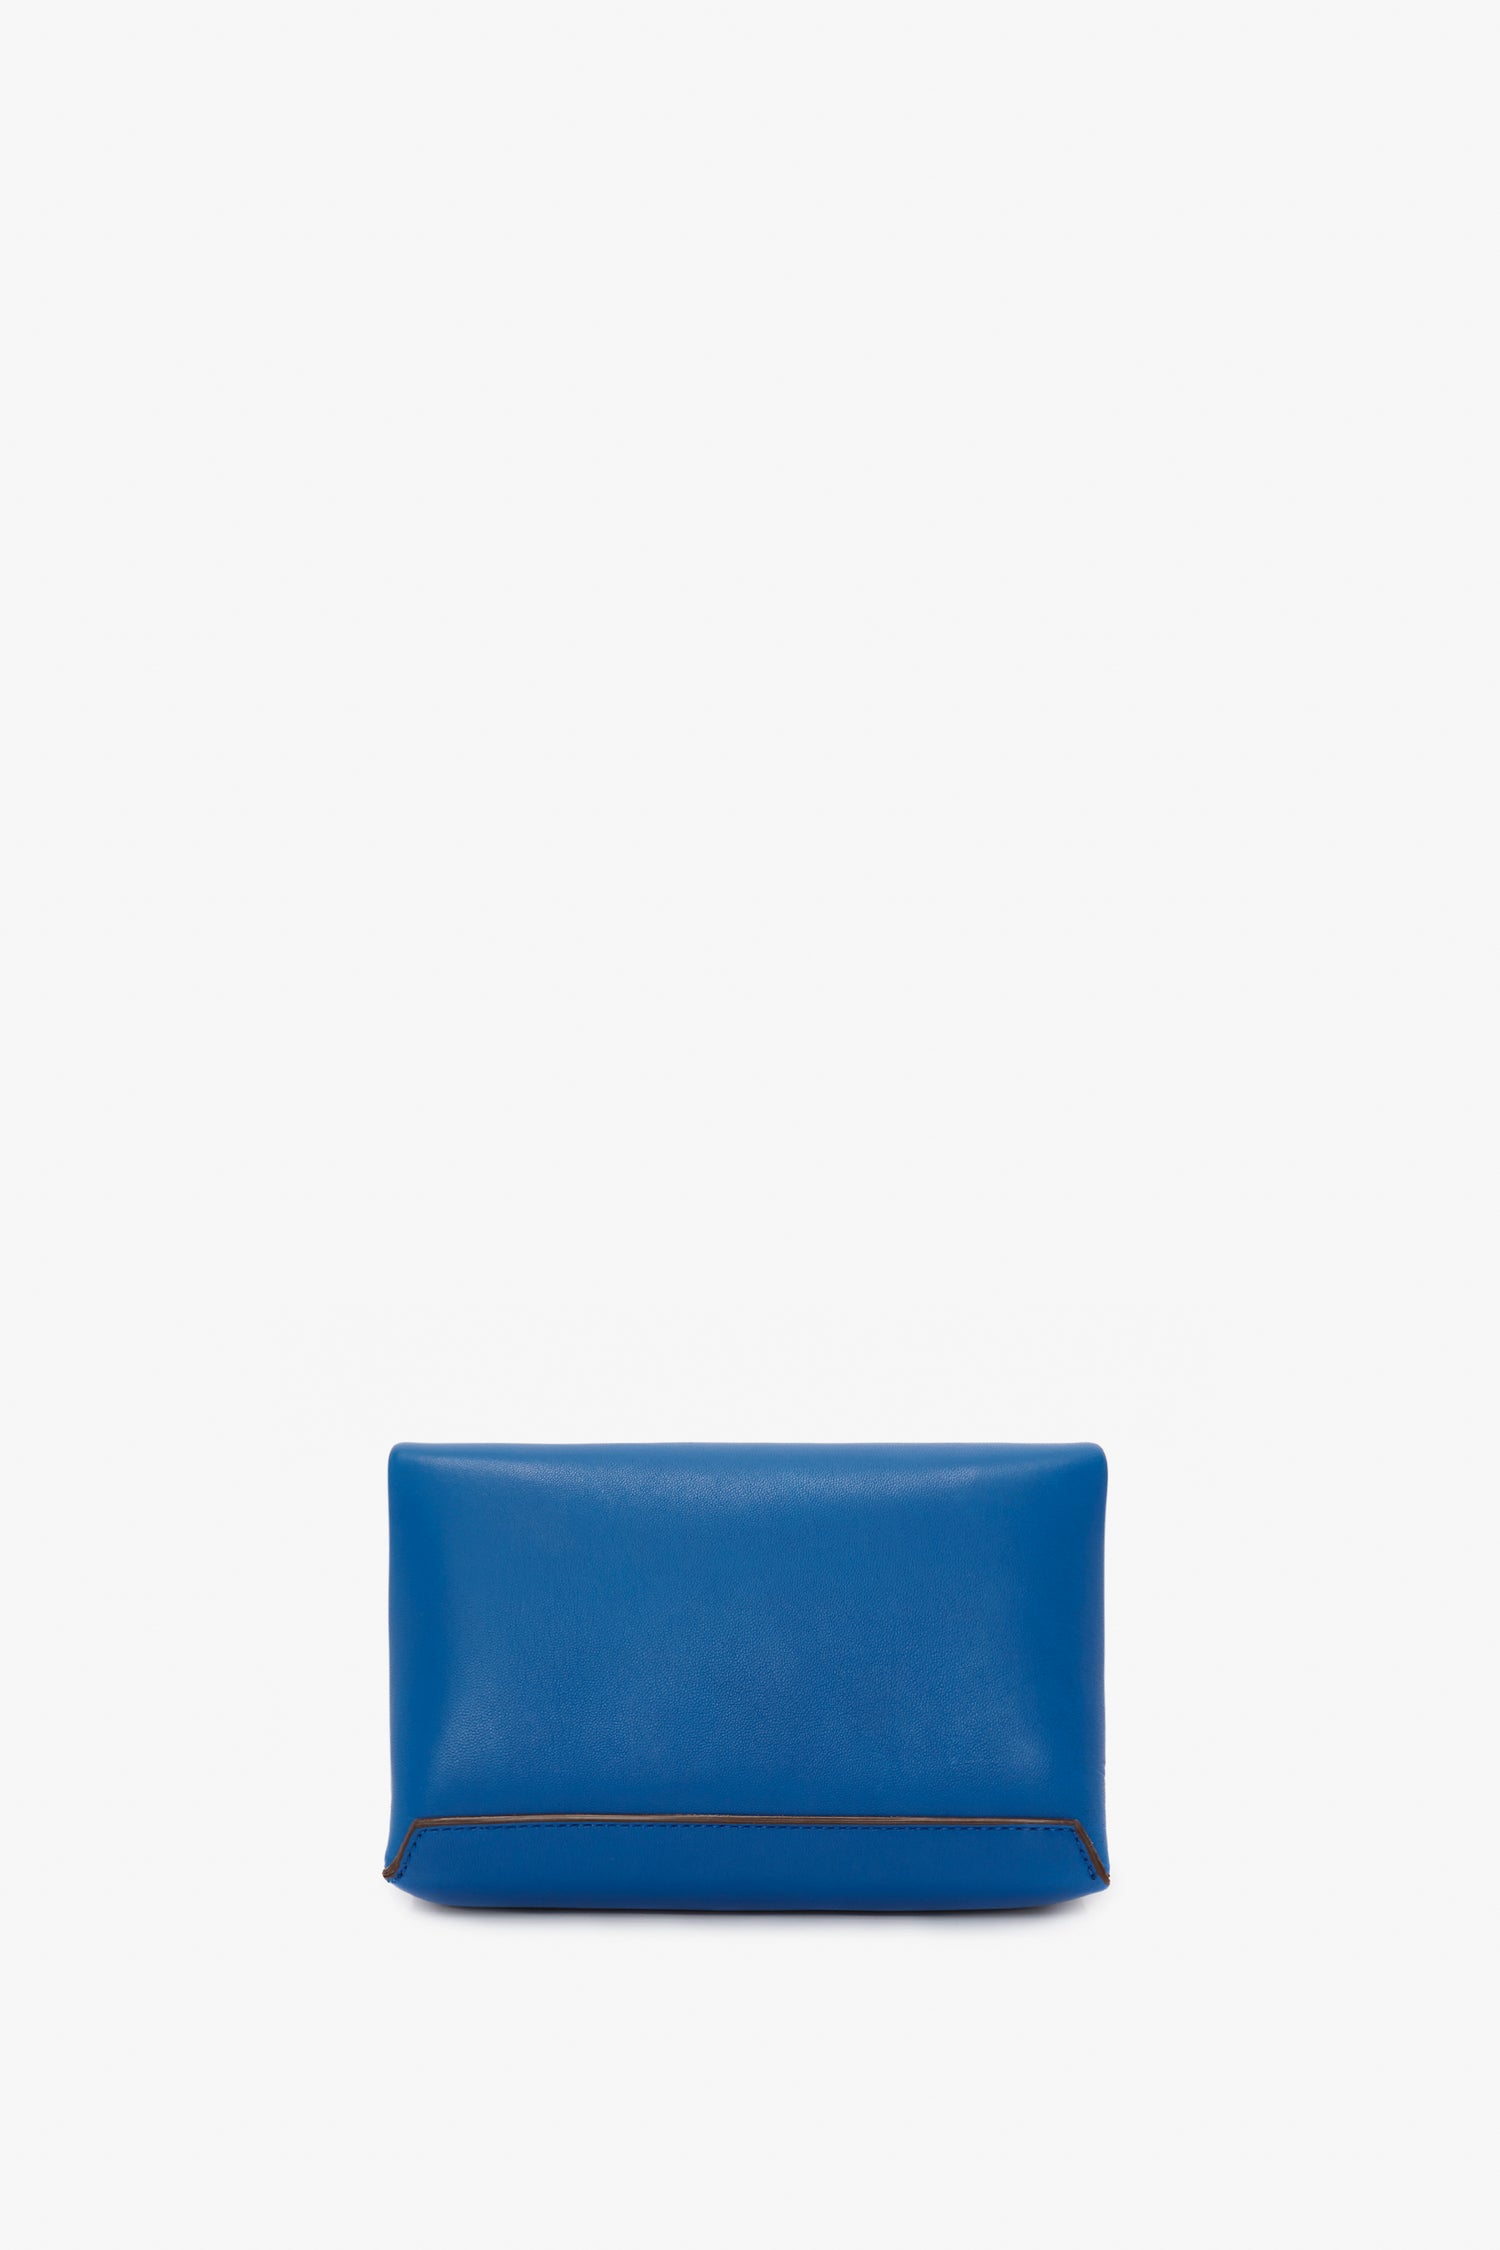 Victoria Beckham Mini Chain Pouch Sapphire Blue Leather Clutch Bag